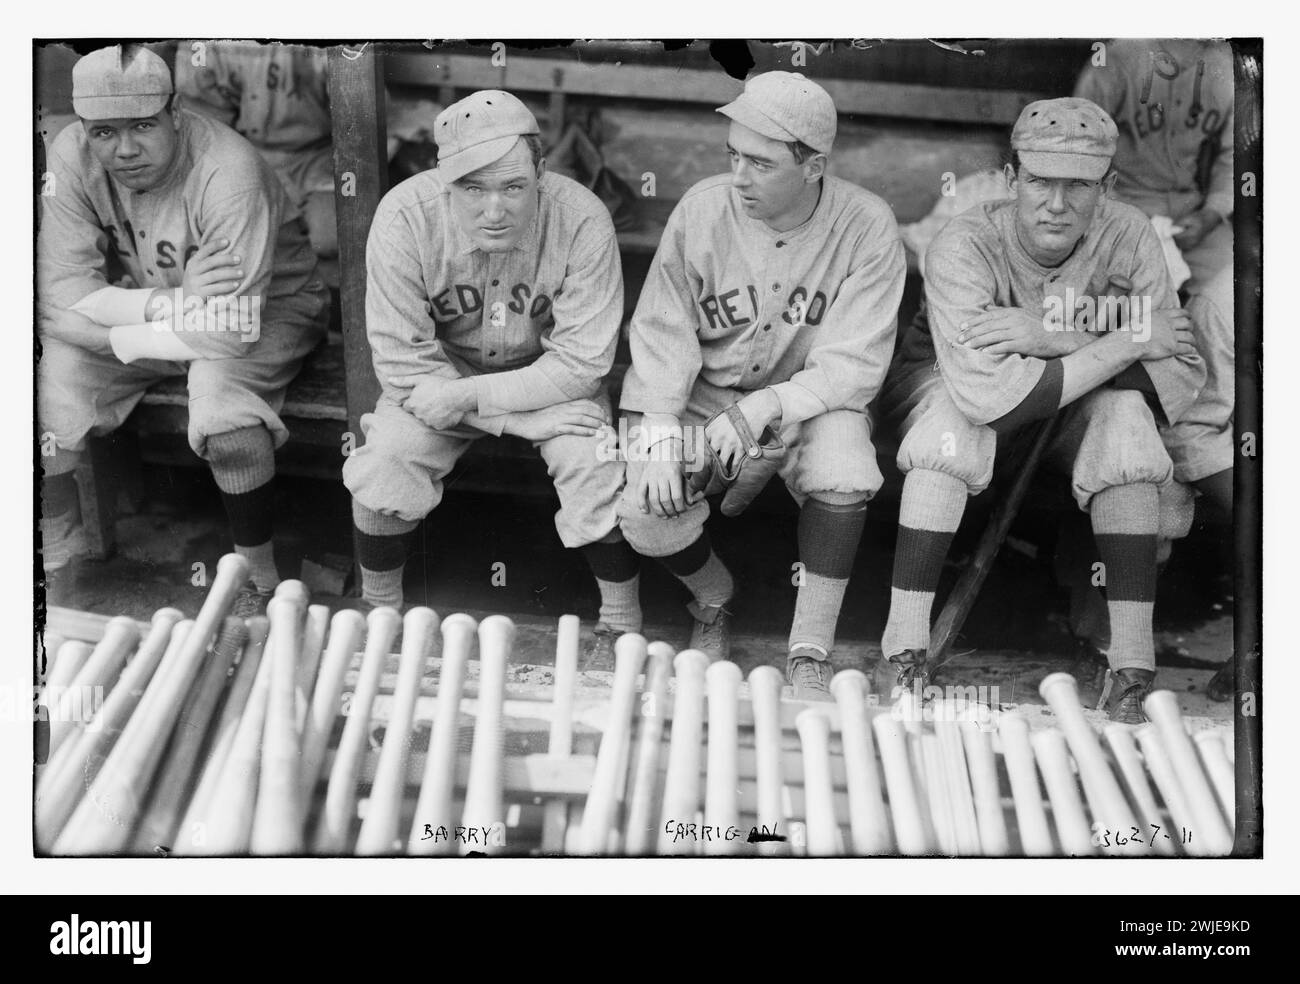 Babe Ruth, Bill Carrigan, Jack Barry, & Vean Gregg, Boston AL - baseball players - 1915 Stock Photo